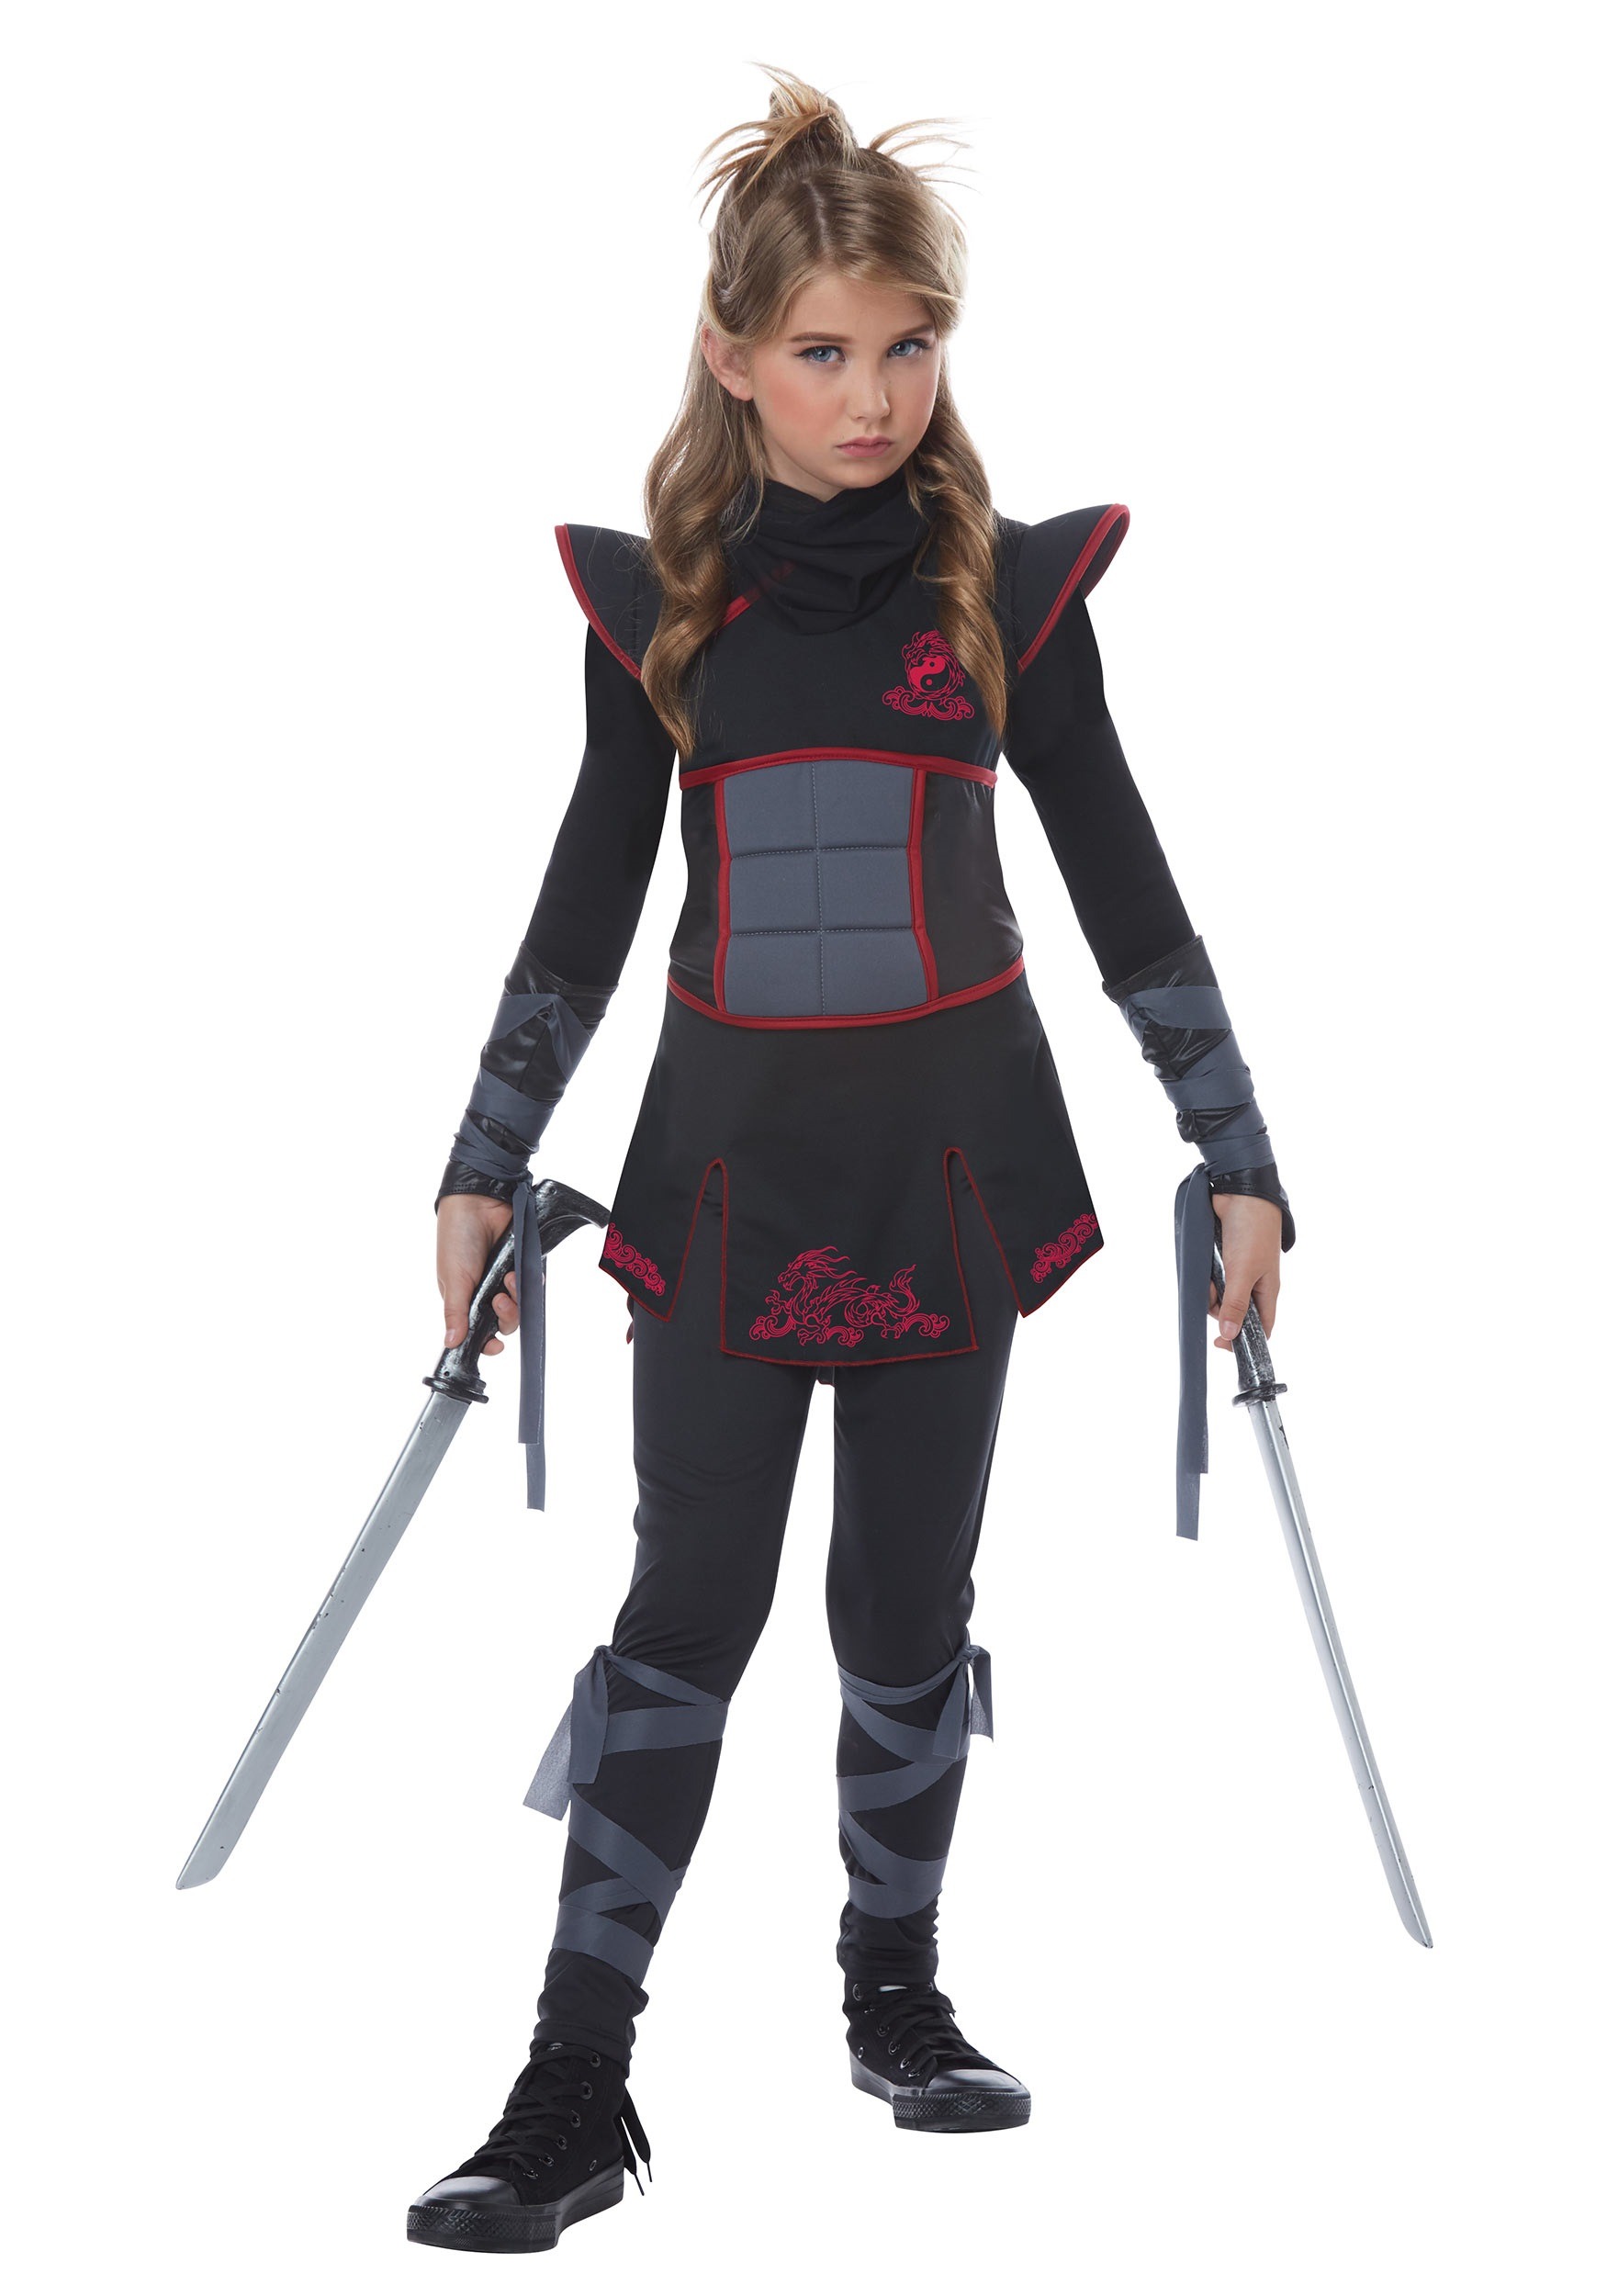 https://images.halloweencostumes.ca/products/40916/2-1-76686/girls-black-ninja-costume.jpg